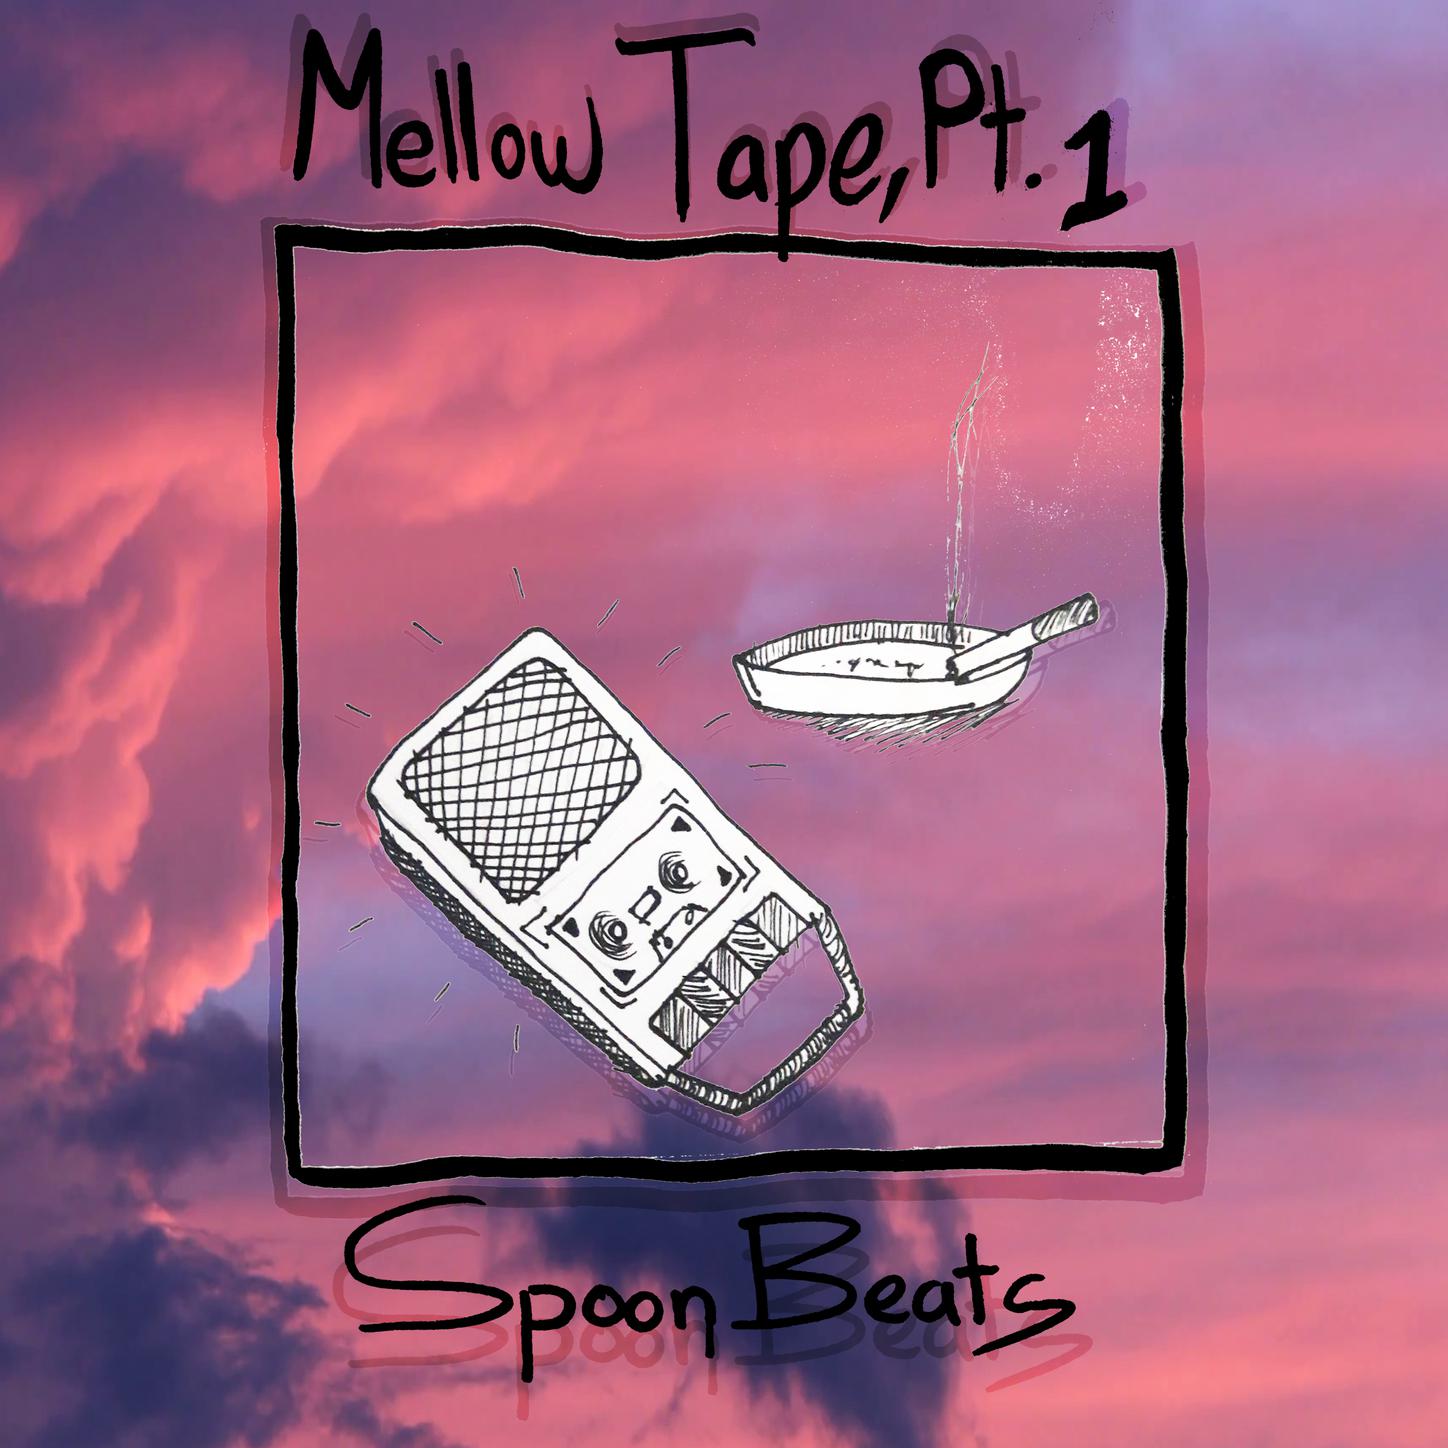 Mellow Tape, Pt. 1